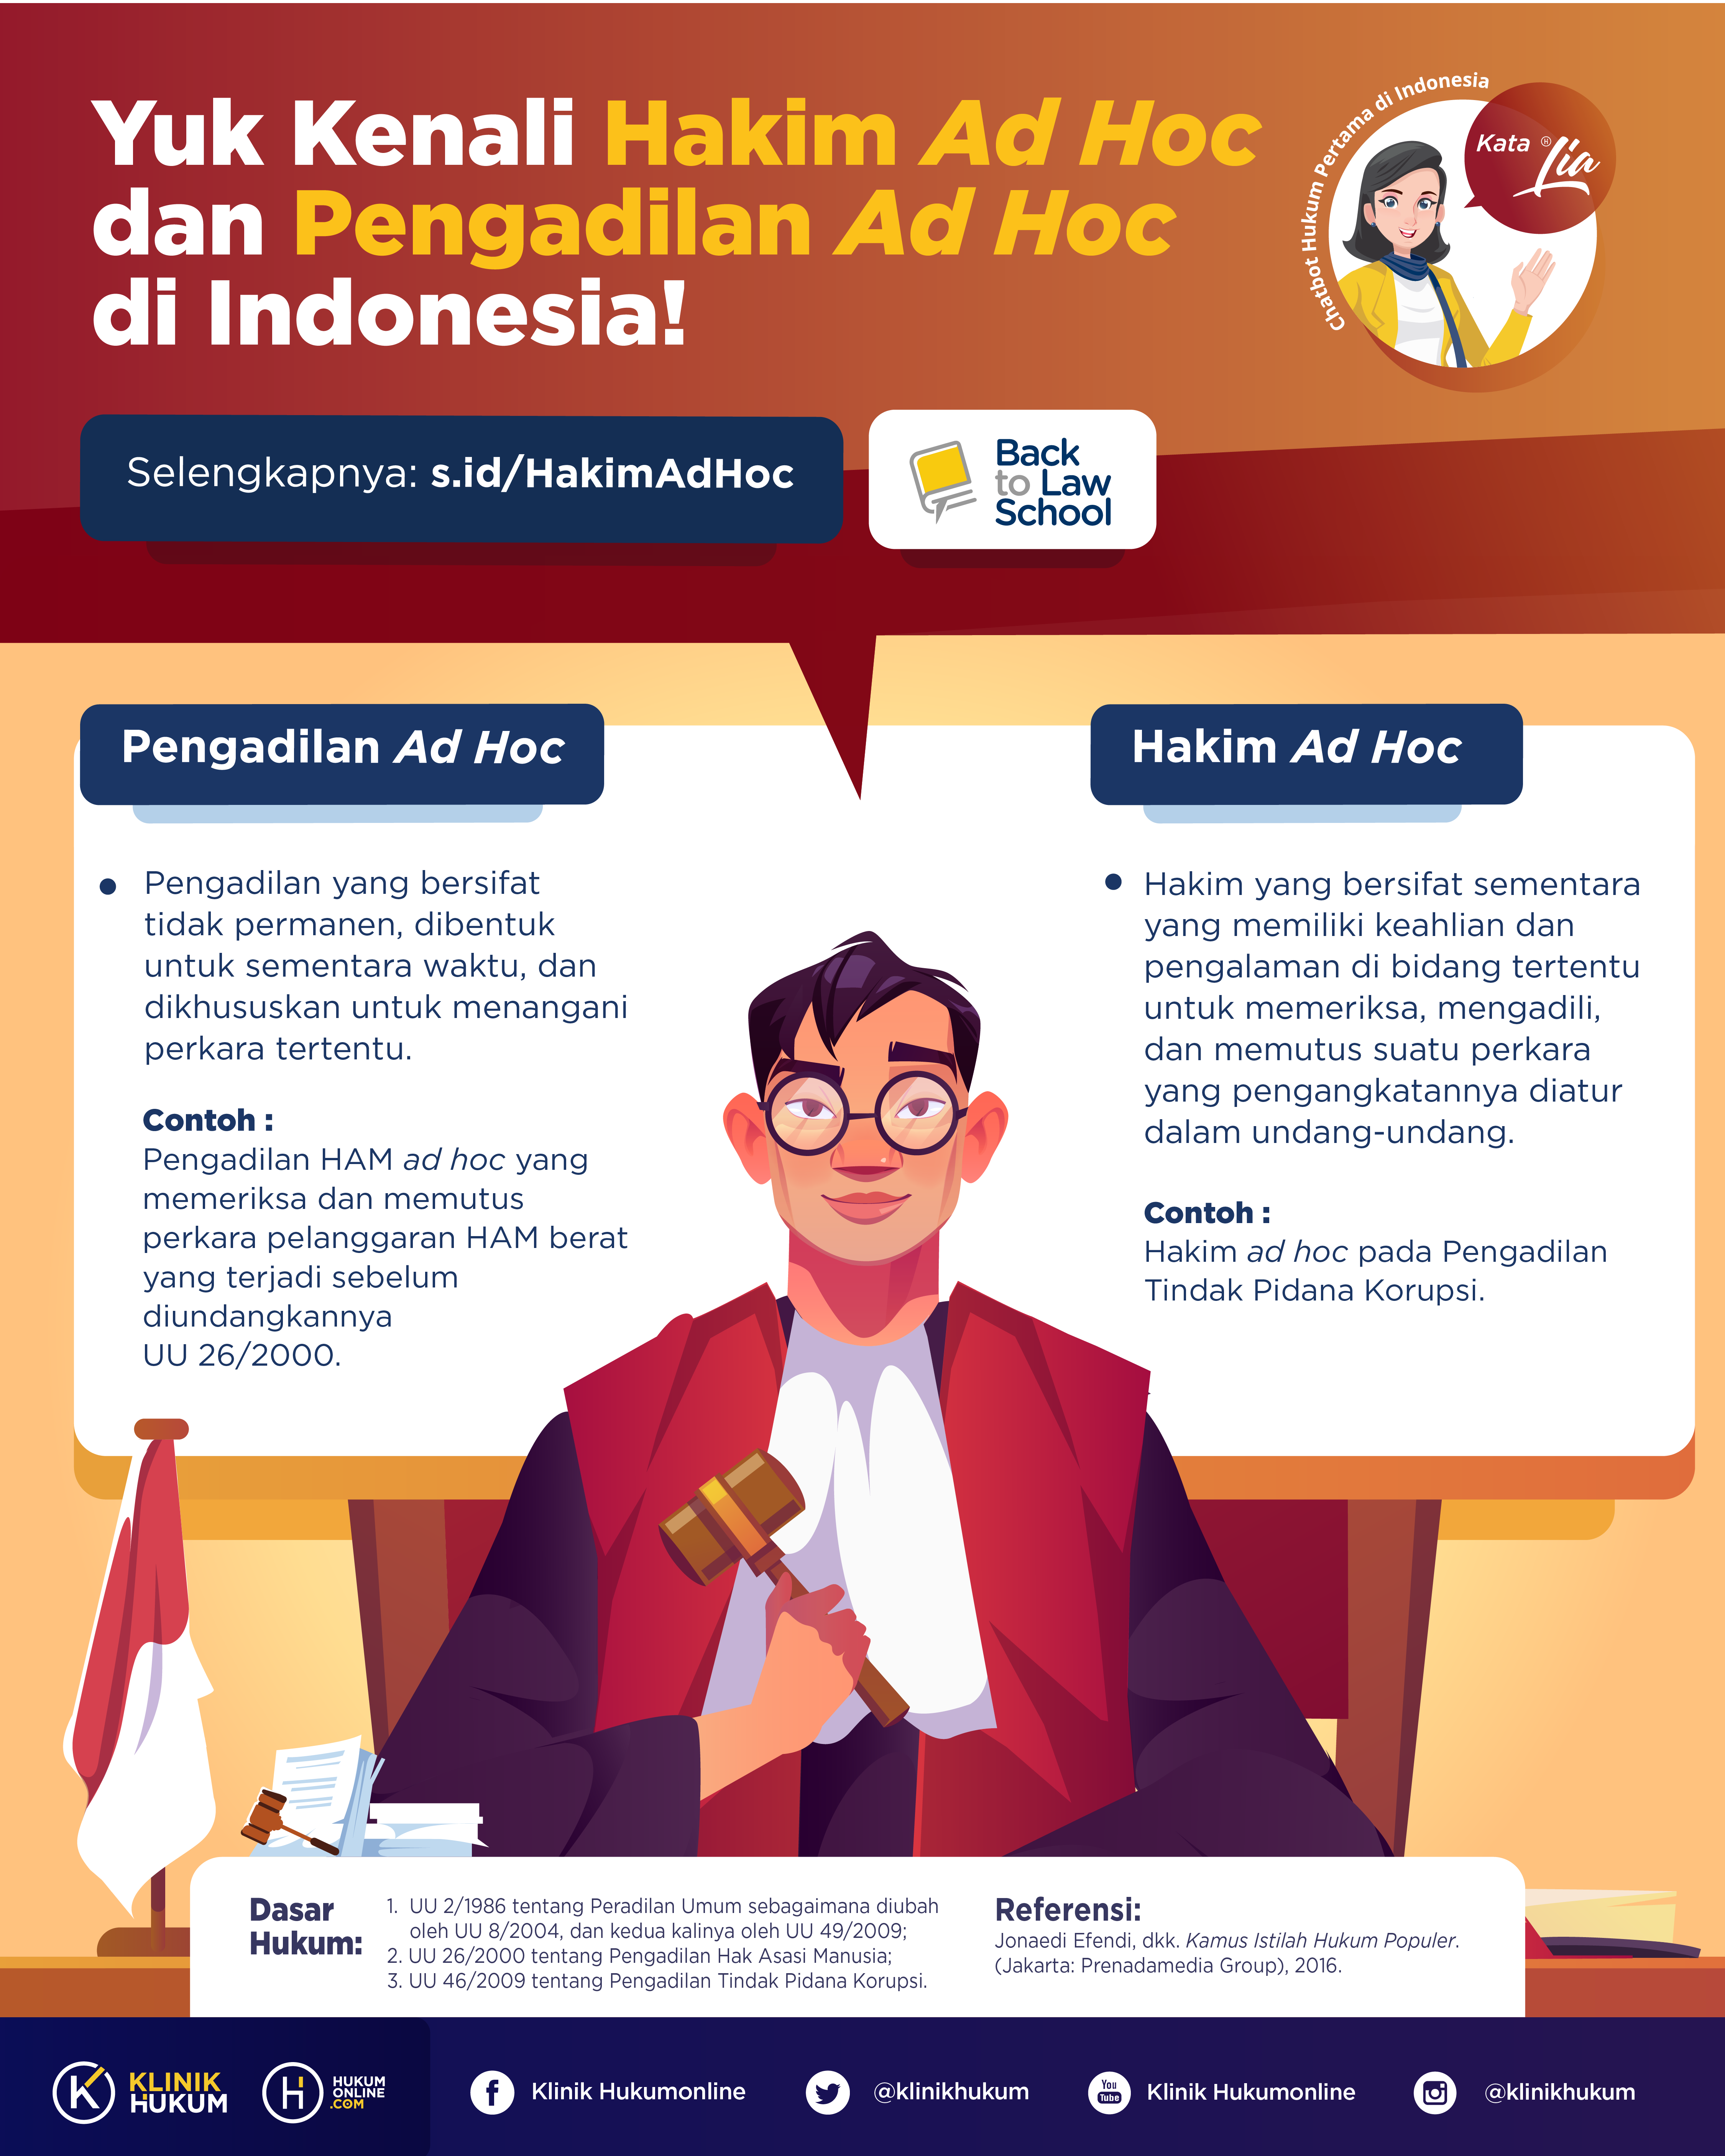 Yuk Kenali Hakim Ad Hoc dan Pengadilan Ad Hoc di Indonesia!